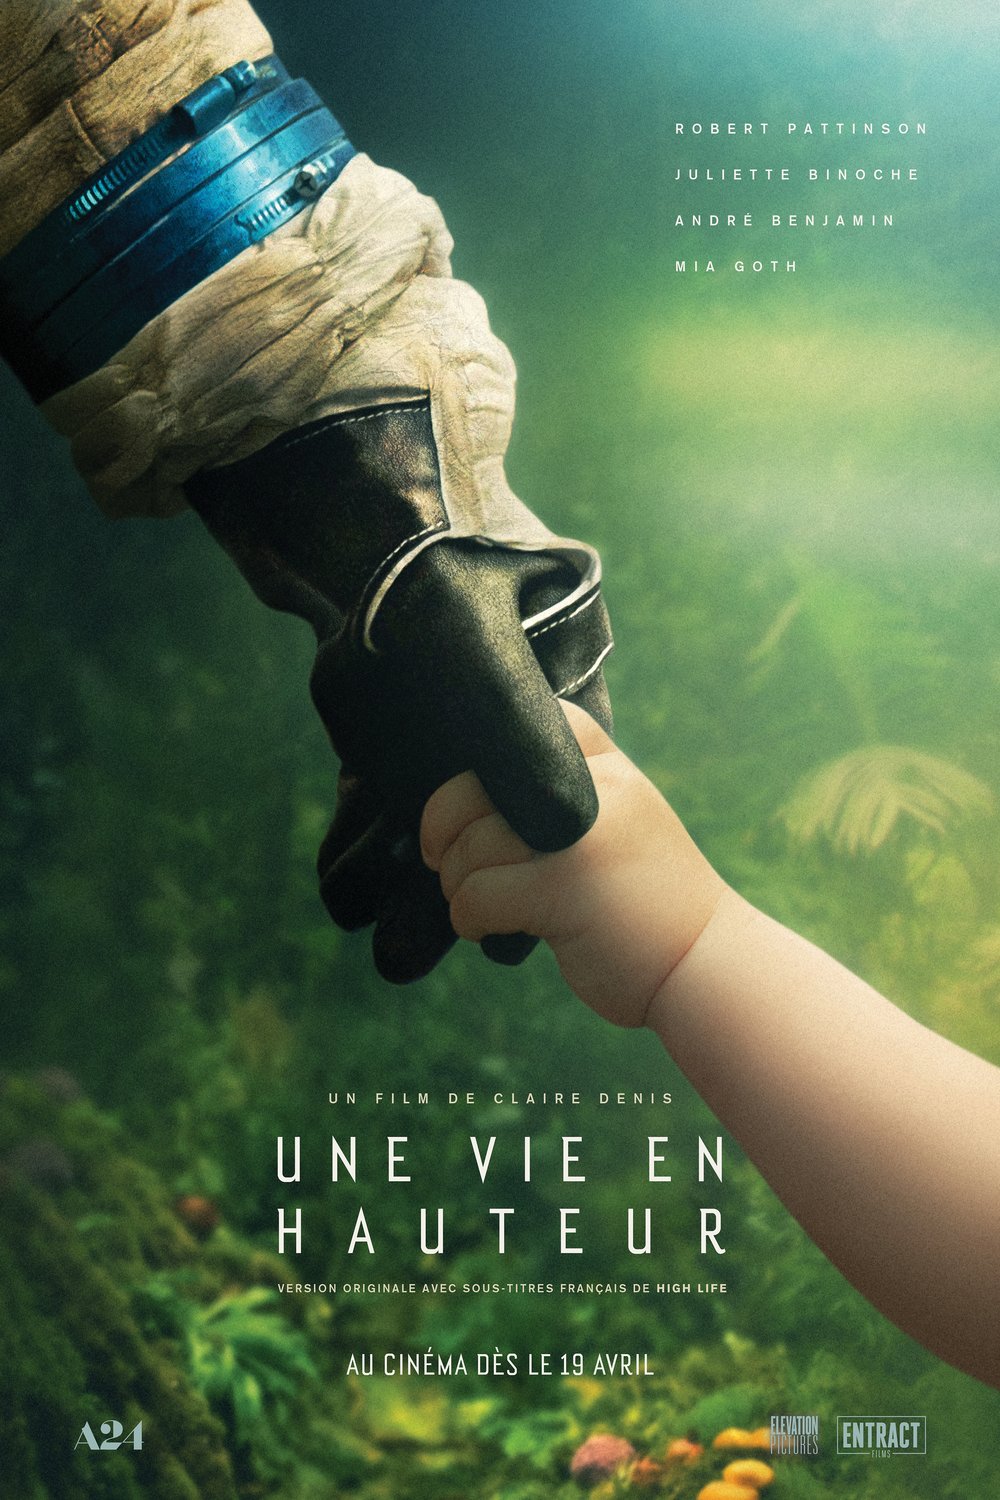 Poster of the movie Une Vie en hauteur